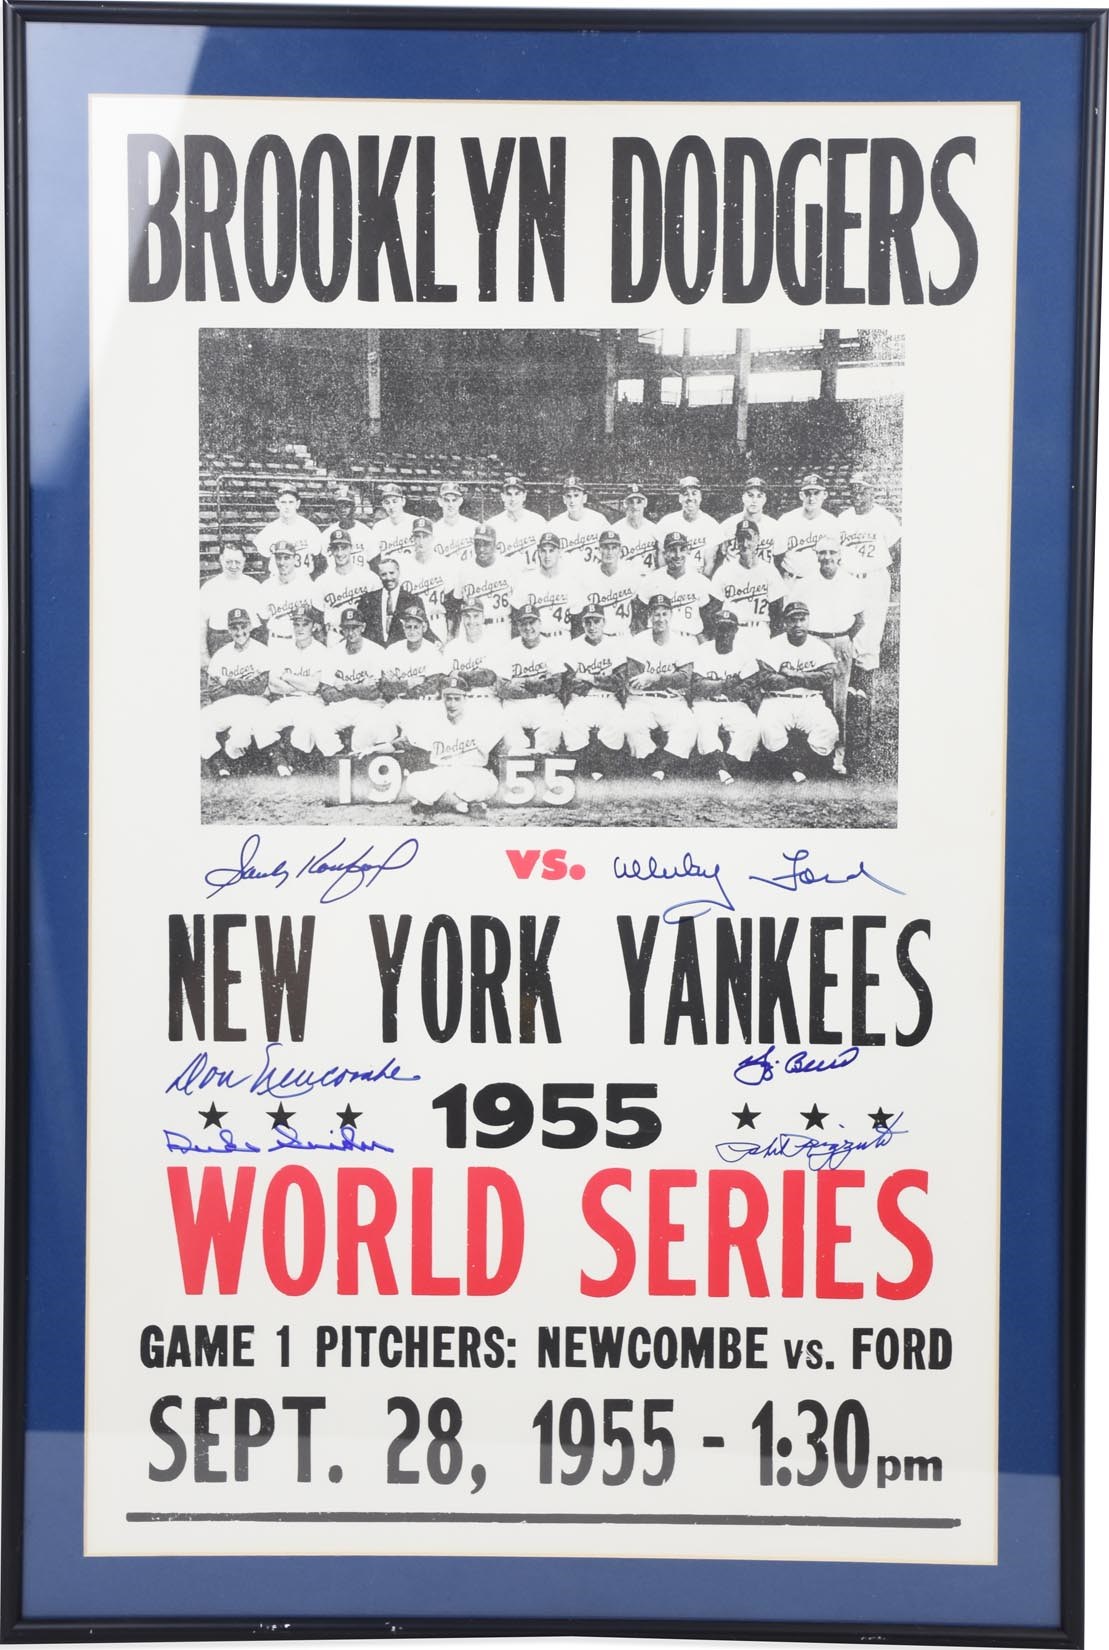 Baseball Autographs - Baseball Legends Autograph & Pennant Collection w/DiMaggio & Koufax (11)